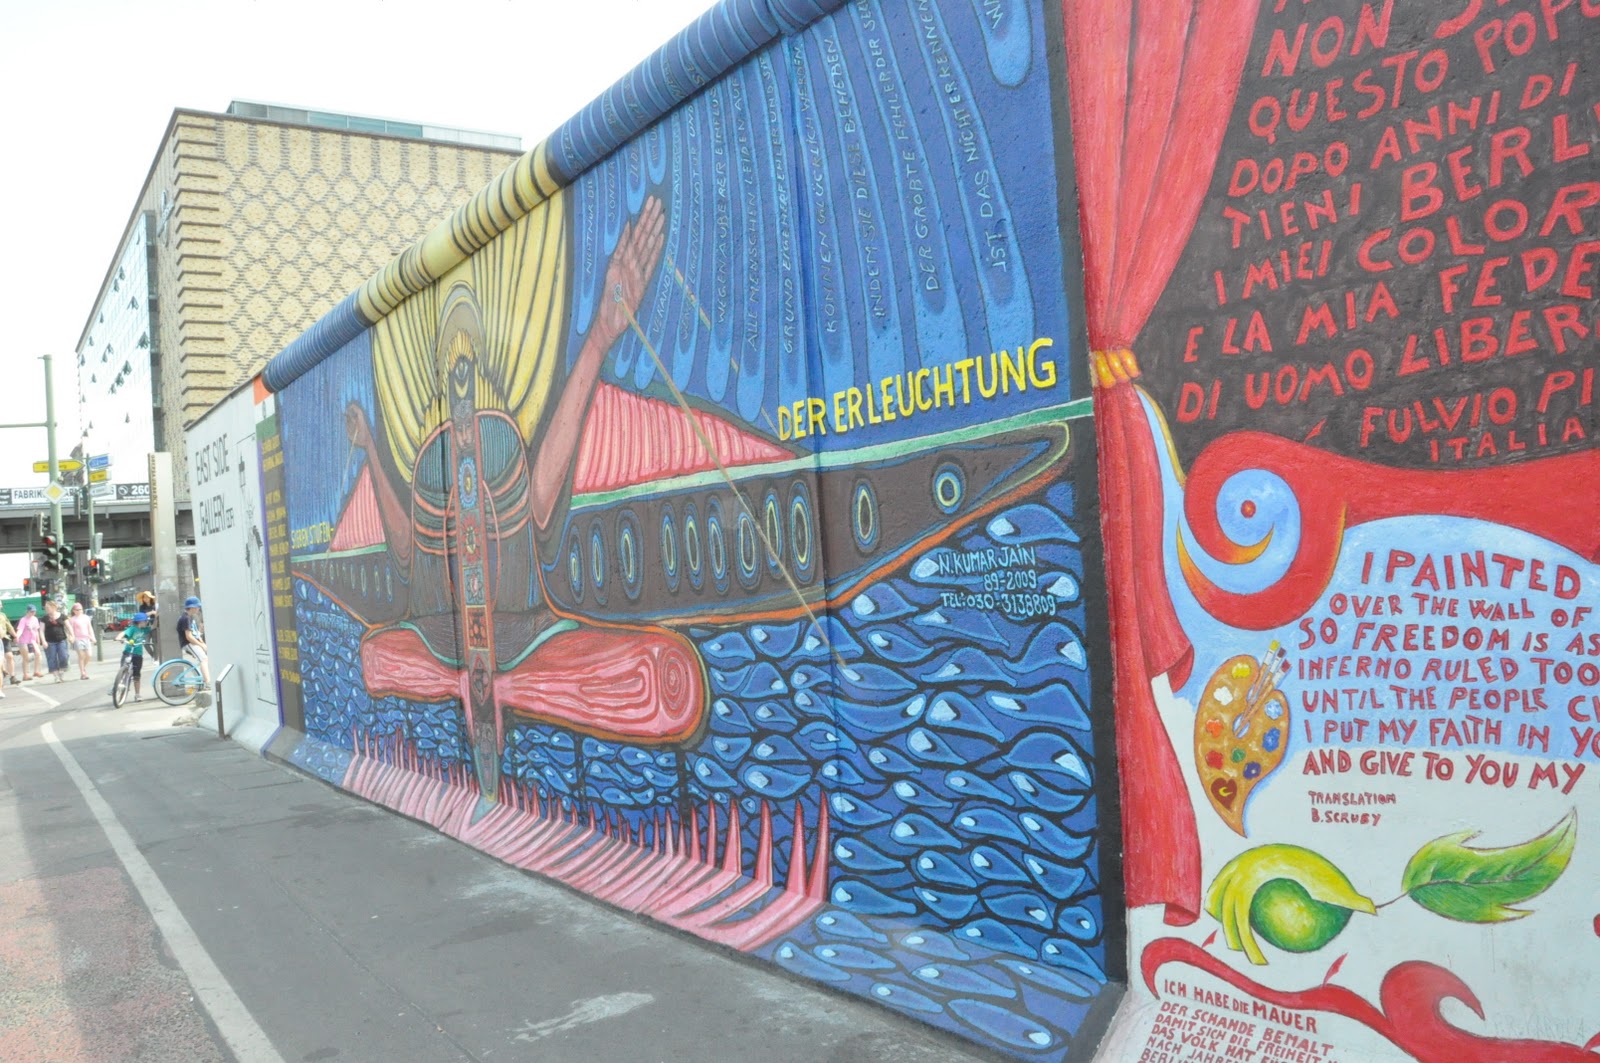 Paris Tastes Freedom As Chocolate Replica Berlin Wall Comes Down